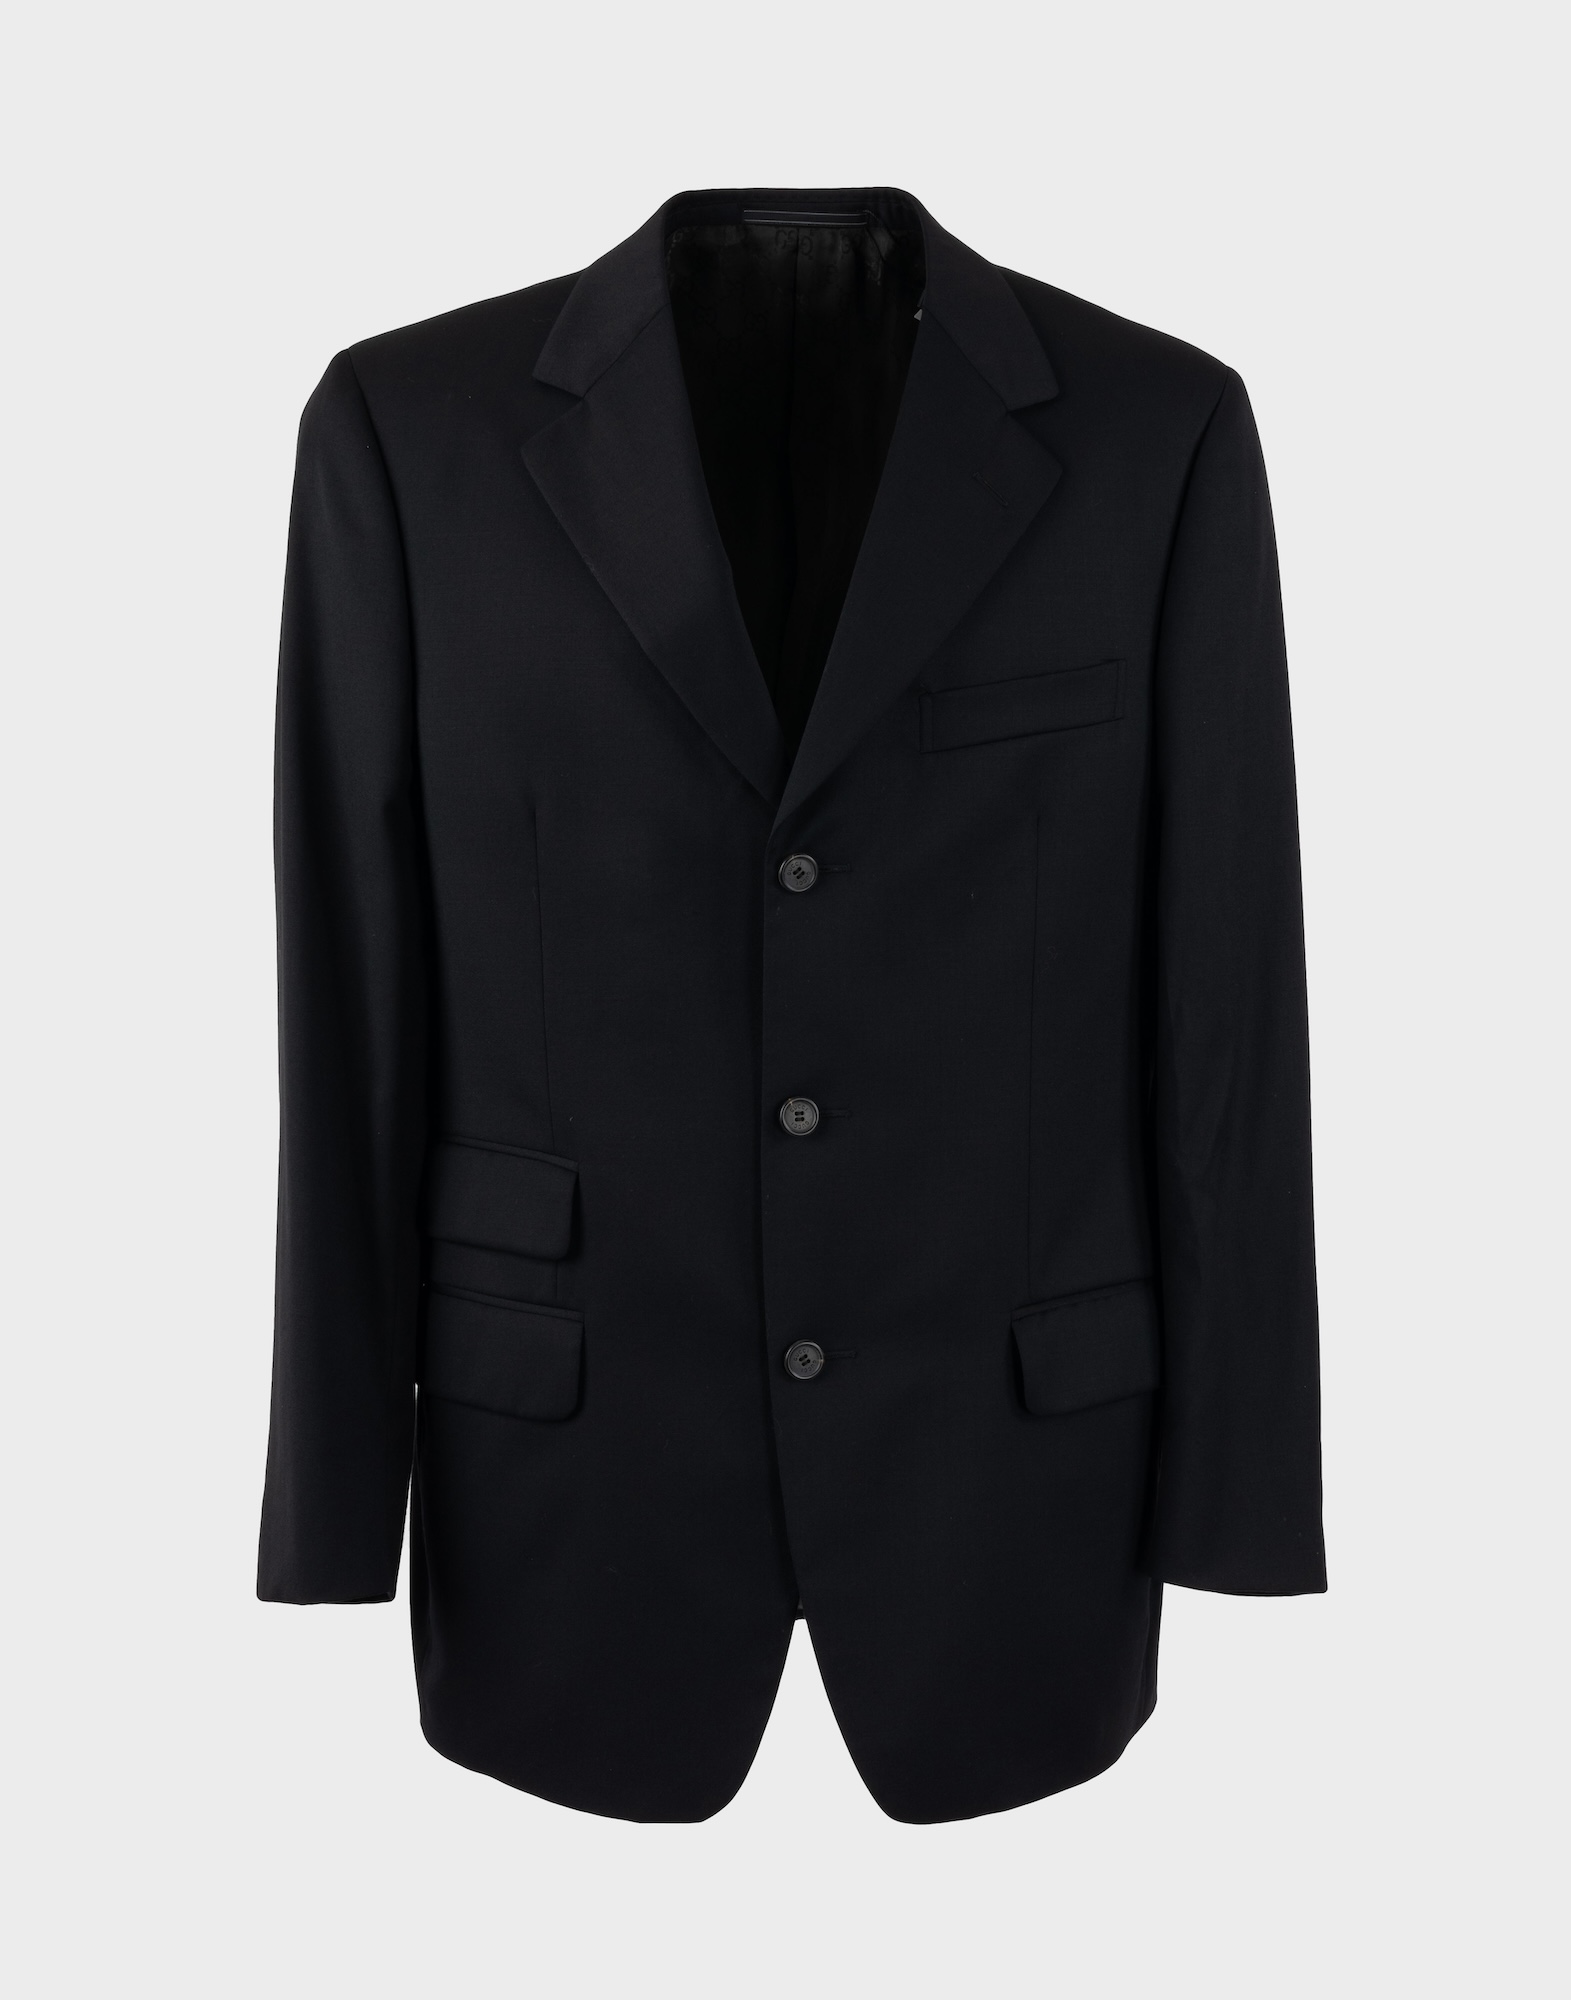 Gucci men's black jacket, three-button front fastening